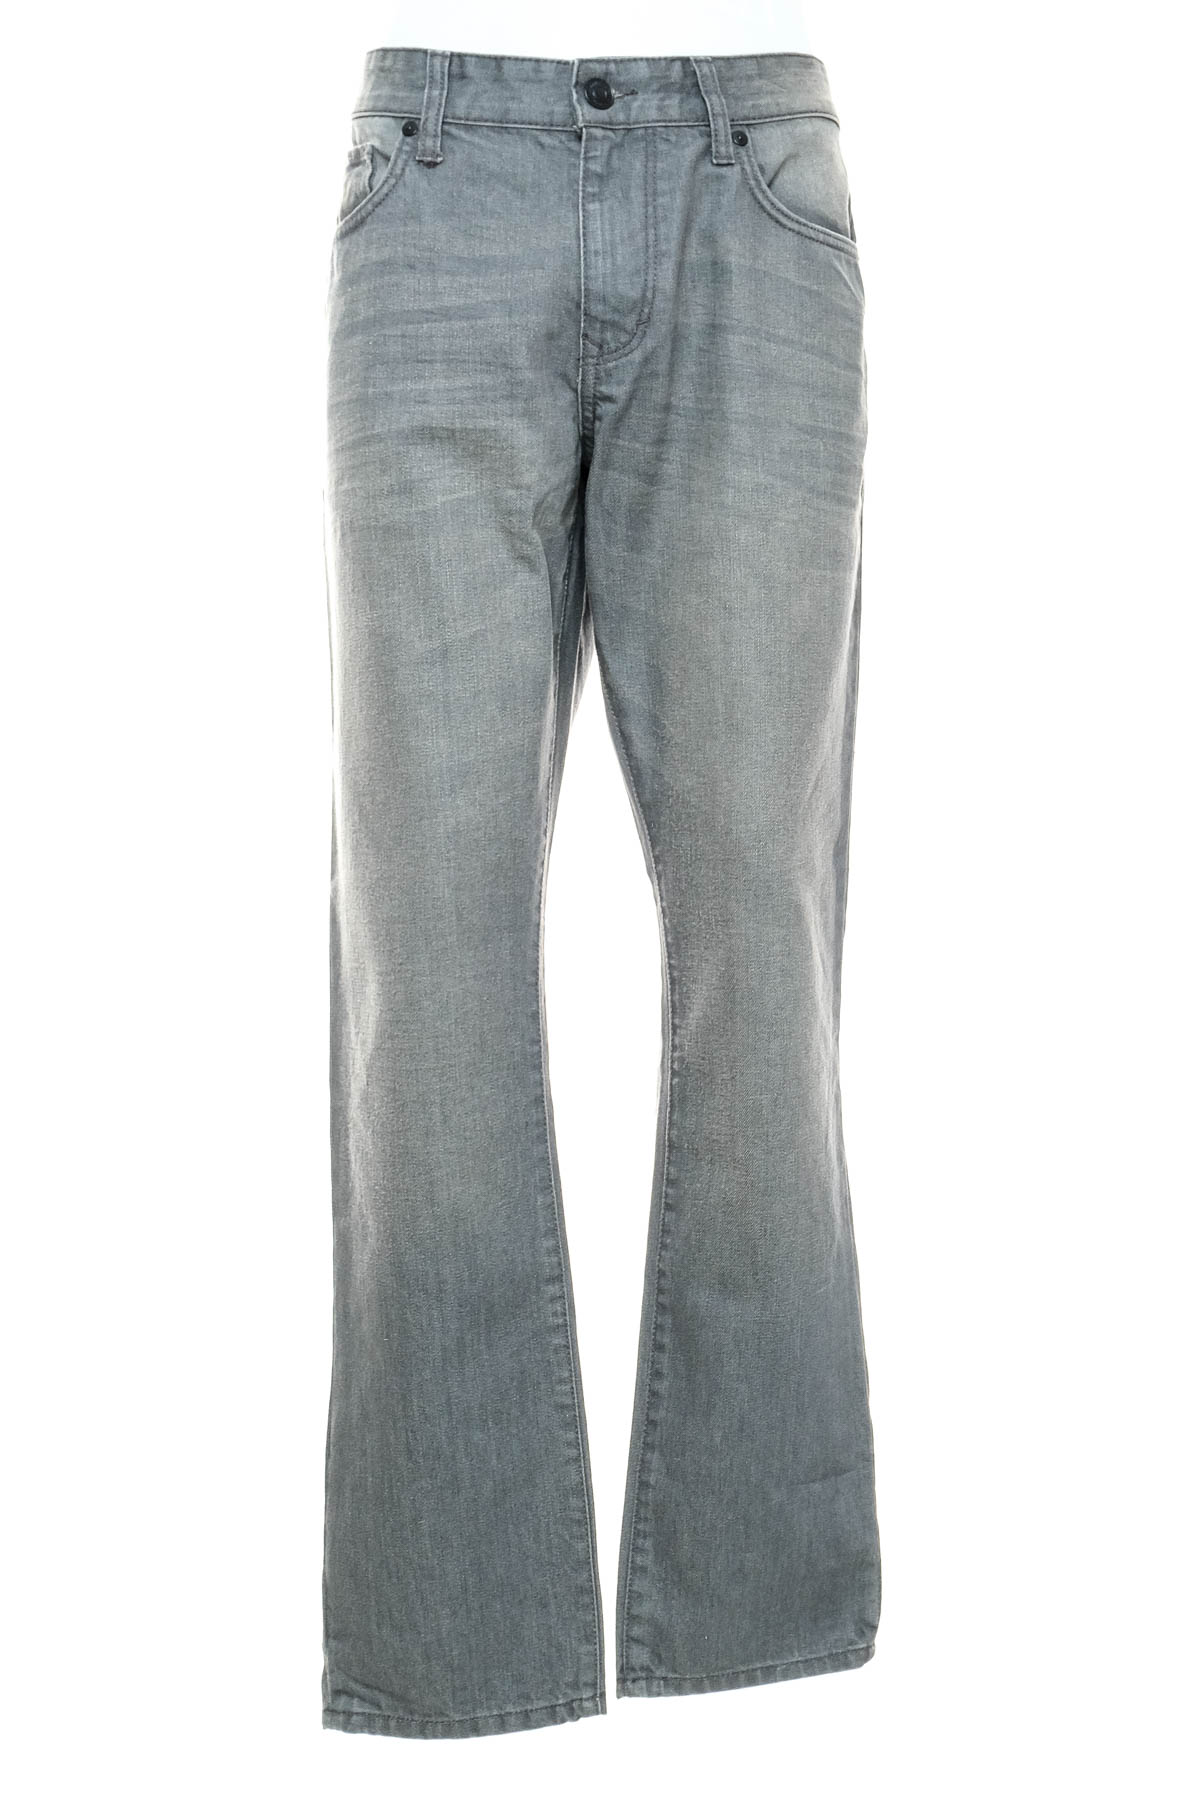 Men's jeans - Angelo Litrico - 0